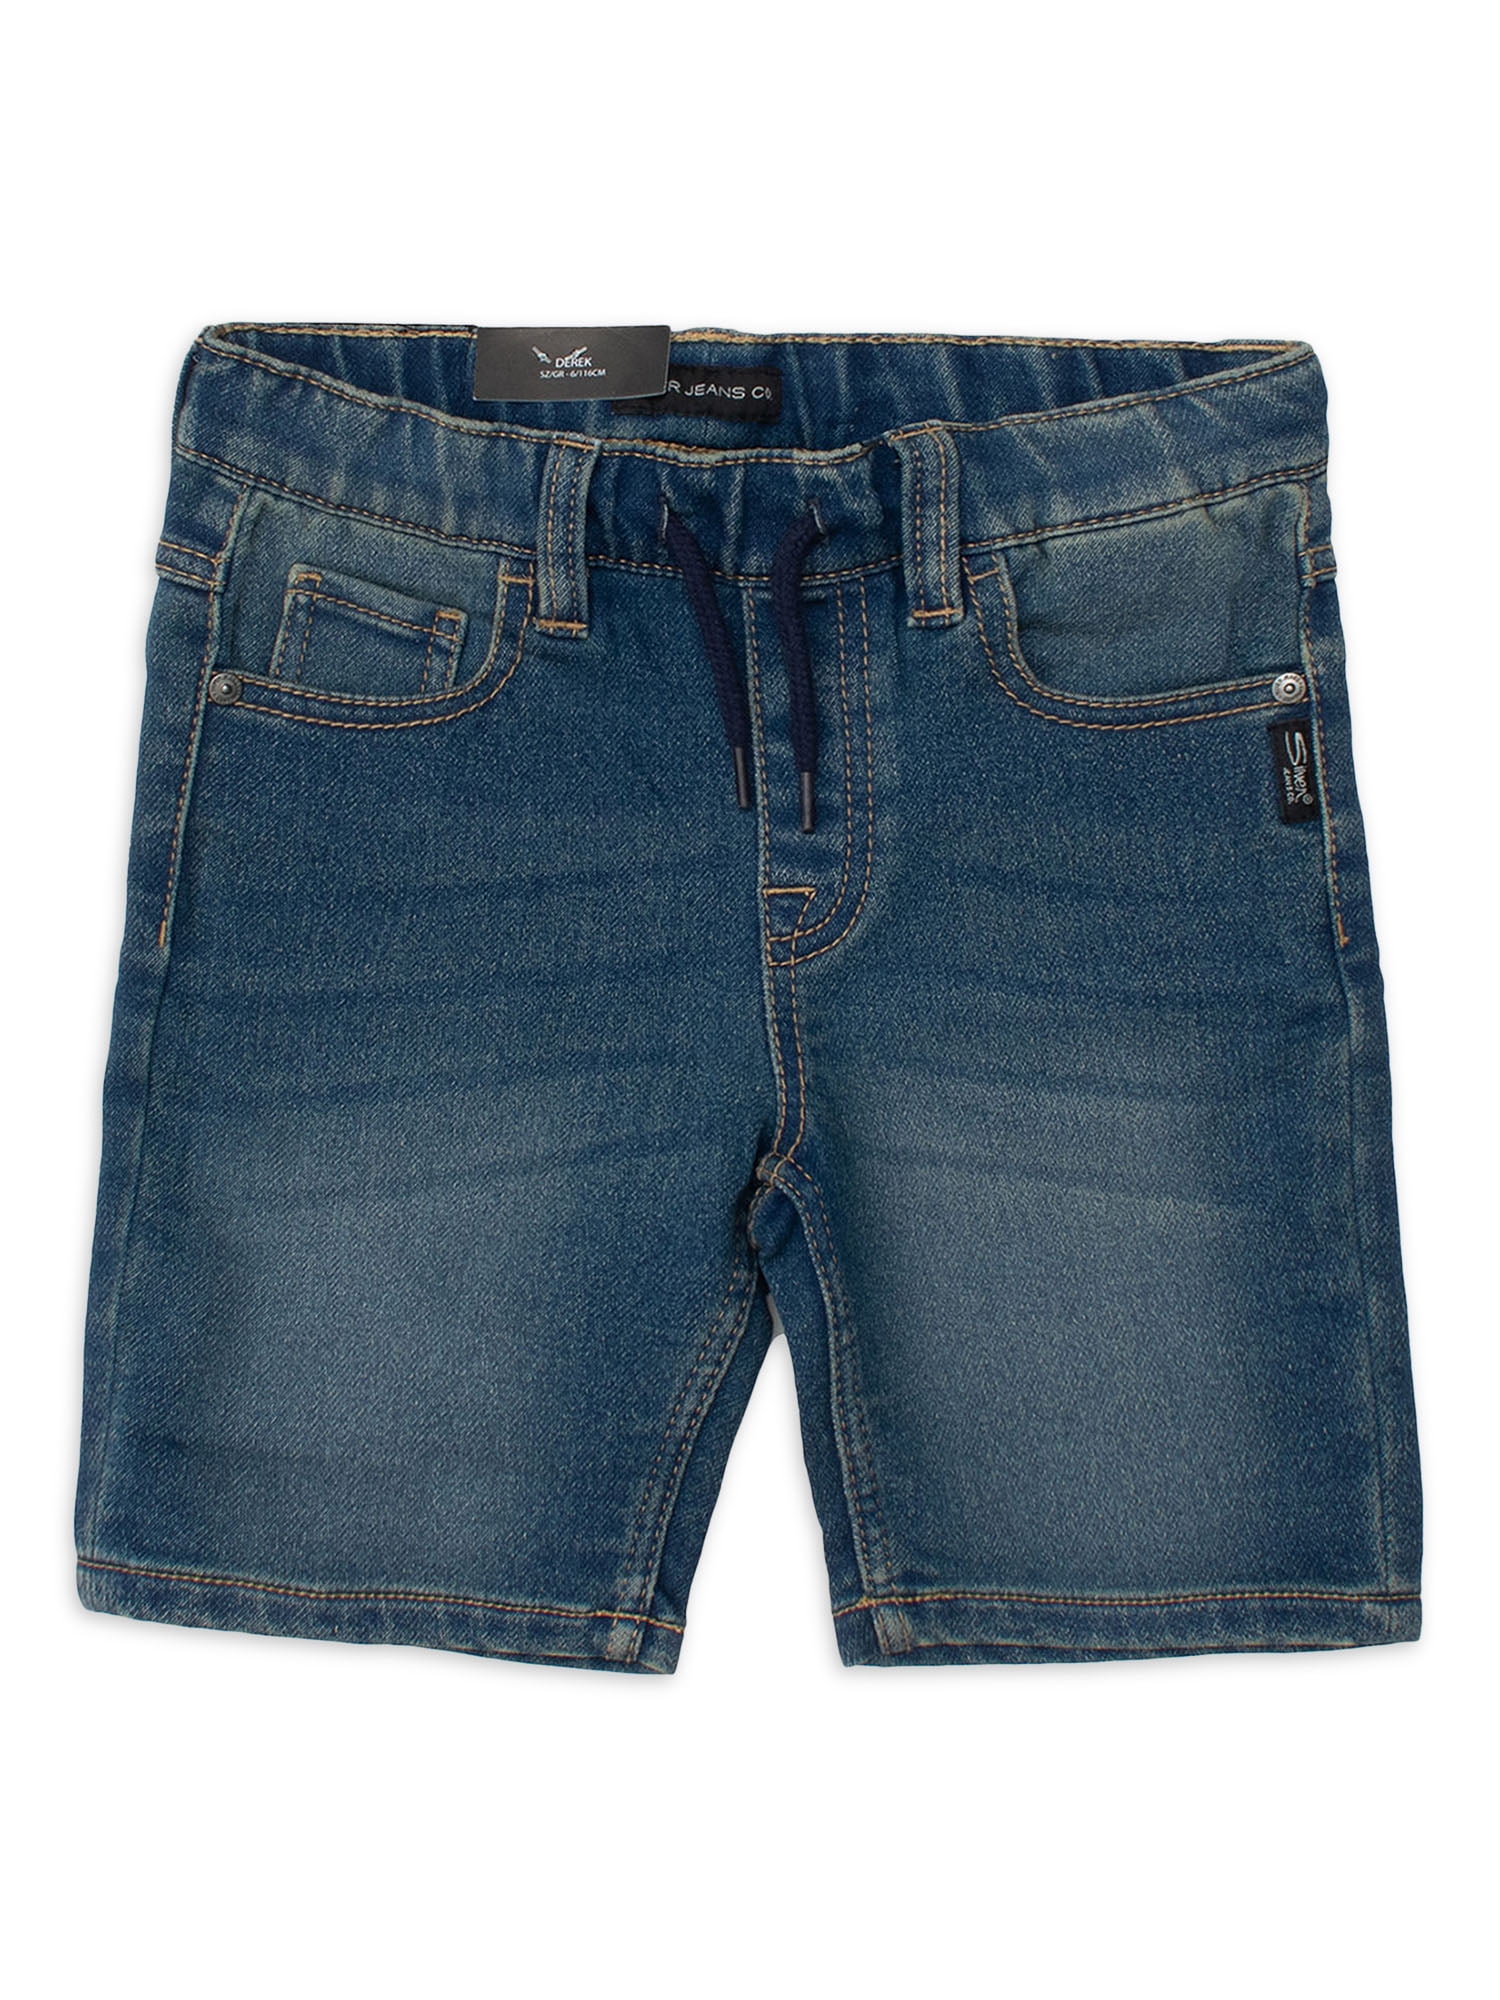 Silver Jeans Co. Boys Knit Denim Pull-On Shorts, Sizes 4-16 - Walmart.com